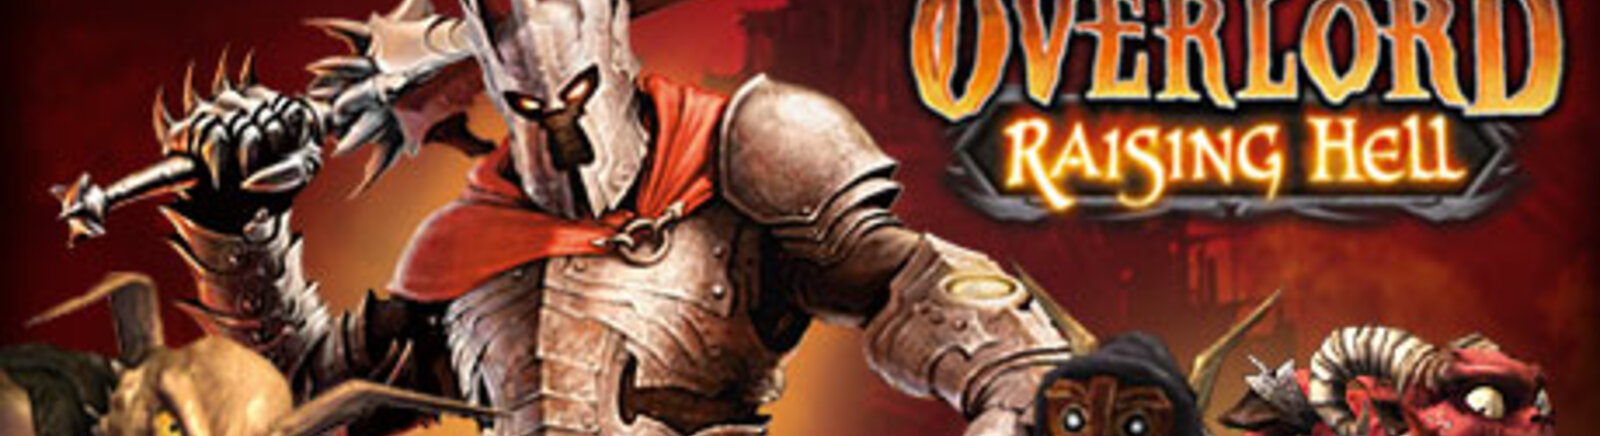 Дата выхода Overlord: Raising Hell  на PC и PS3 в России и во всем мире